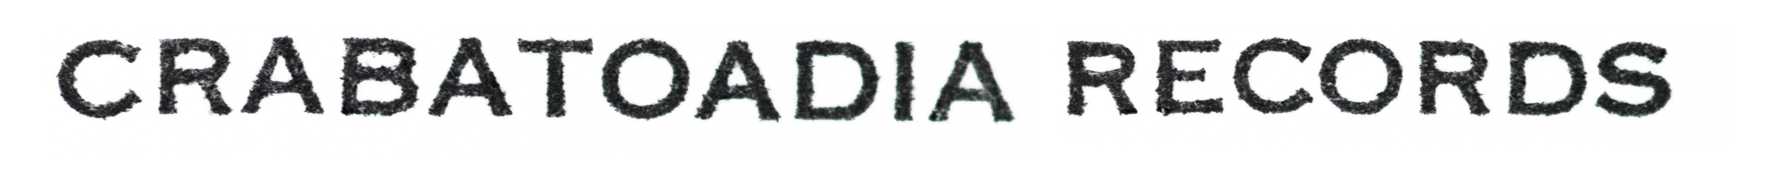 crabatoadia logo